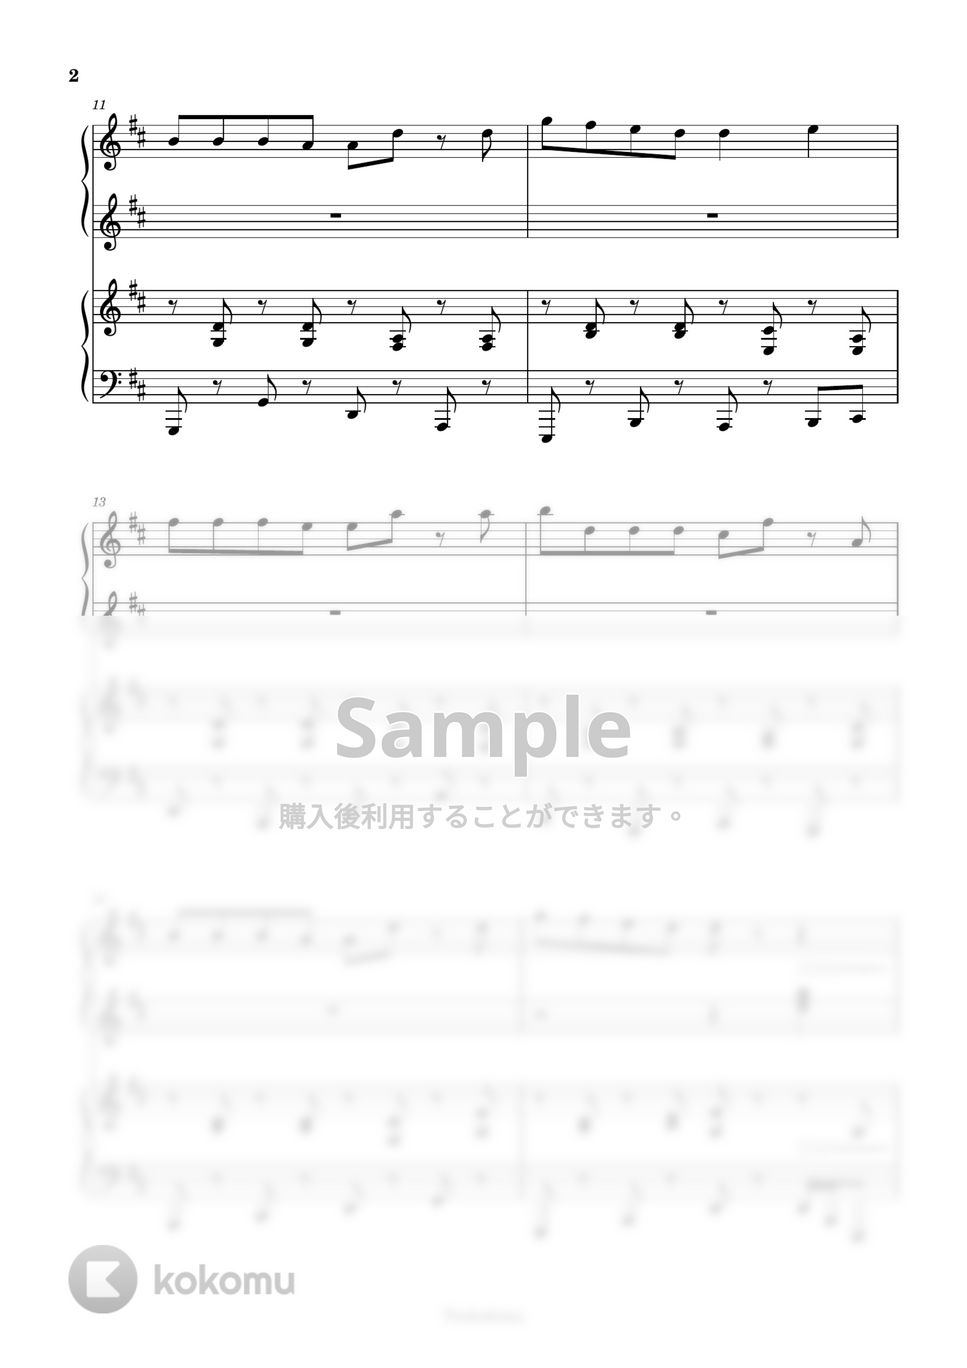 HoneyWorks - 可愛くてごめん (ピアノ連弾) by Trohishima